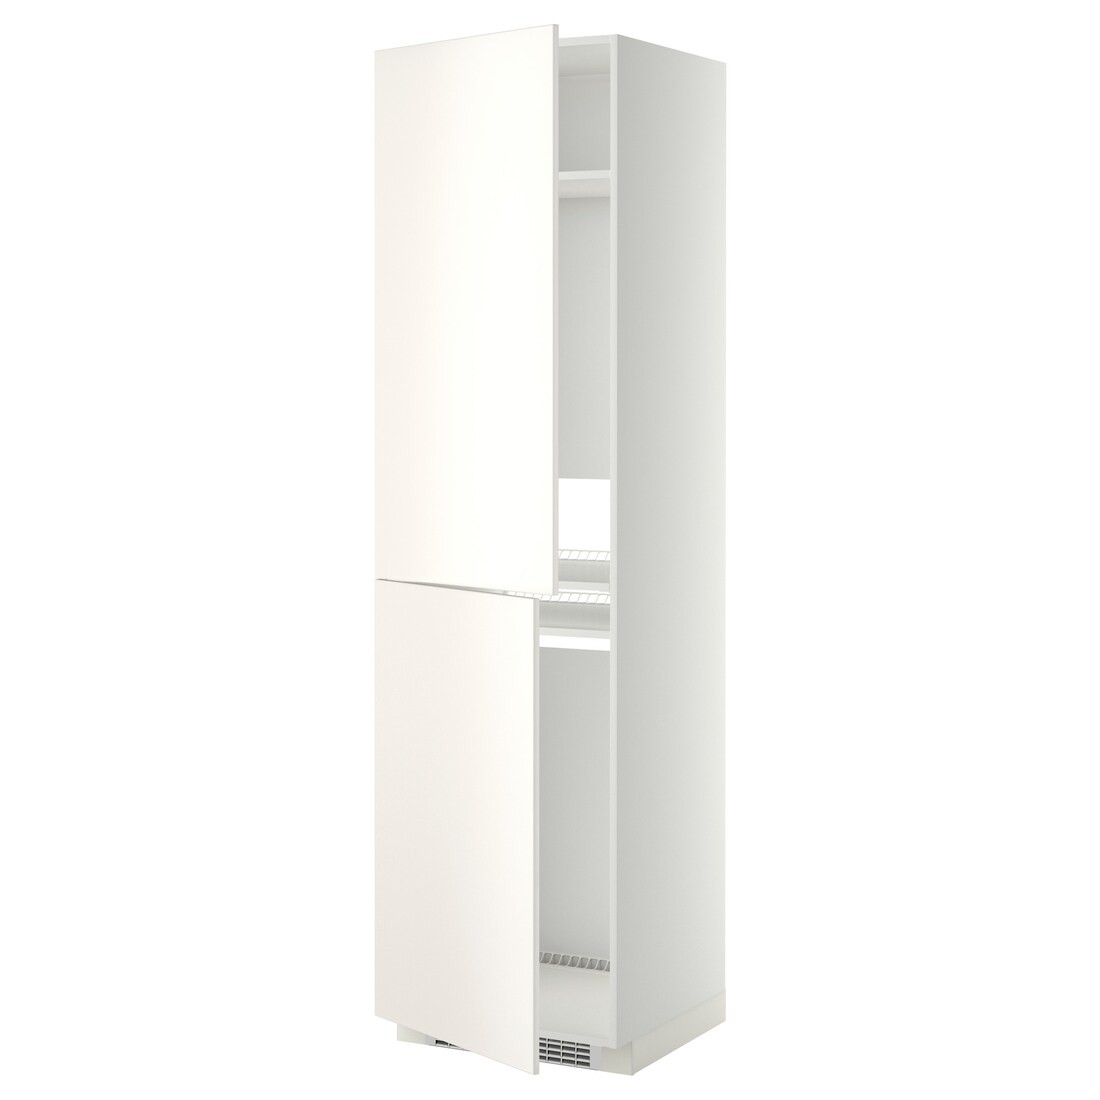 IKEA METOD МЕТОД Высокий шкаф для холодильника / морозильника, белый / Veddinge белый, 60x60x220 см 49920709 499.207.09